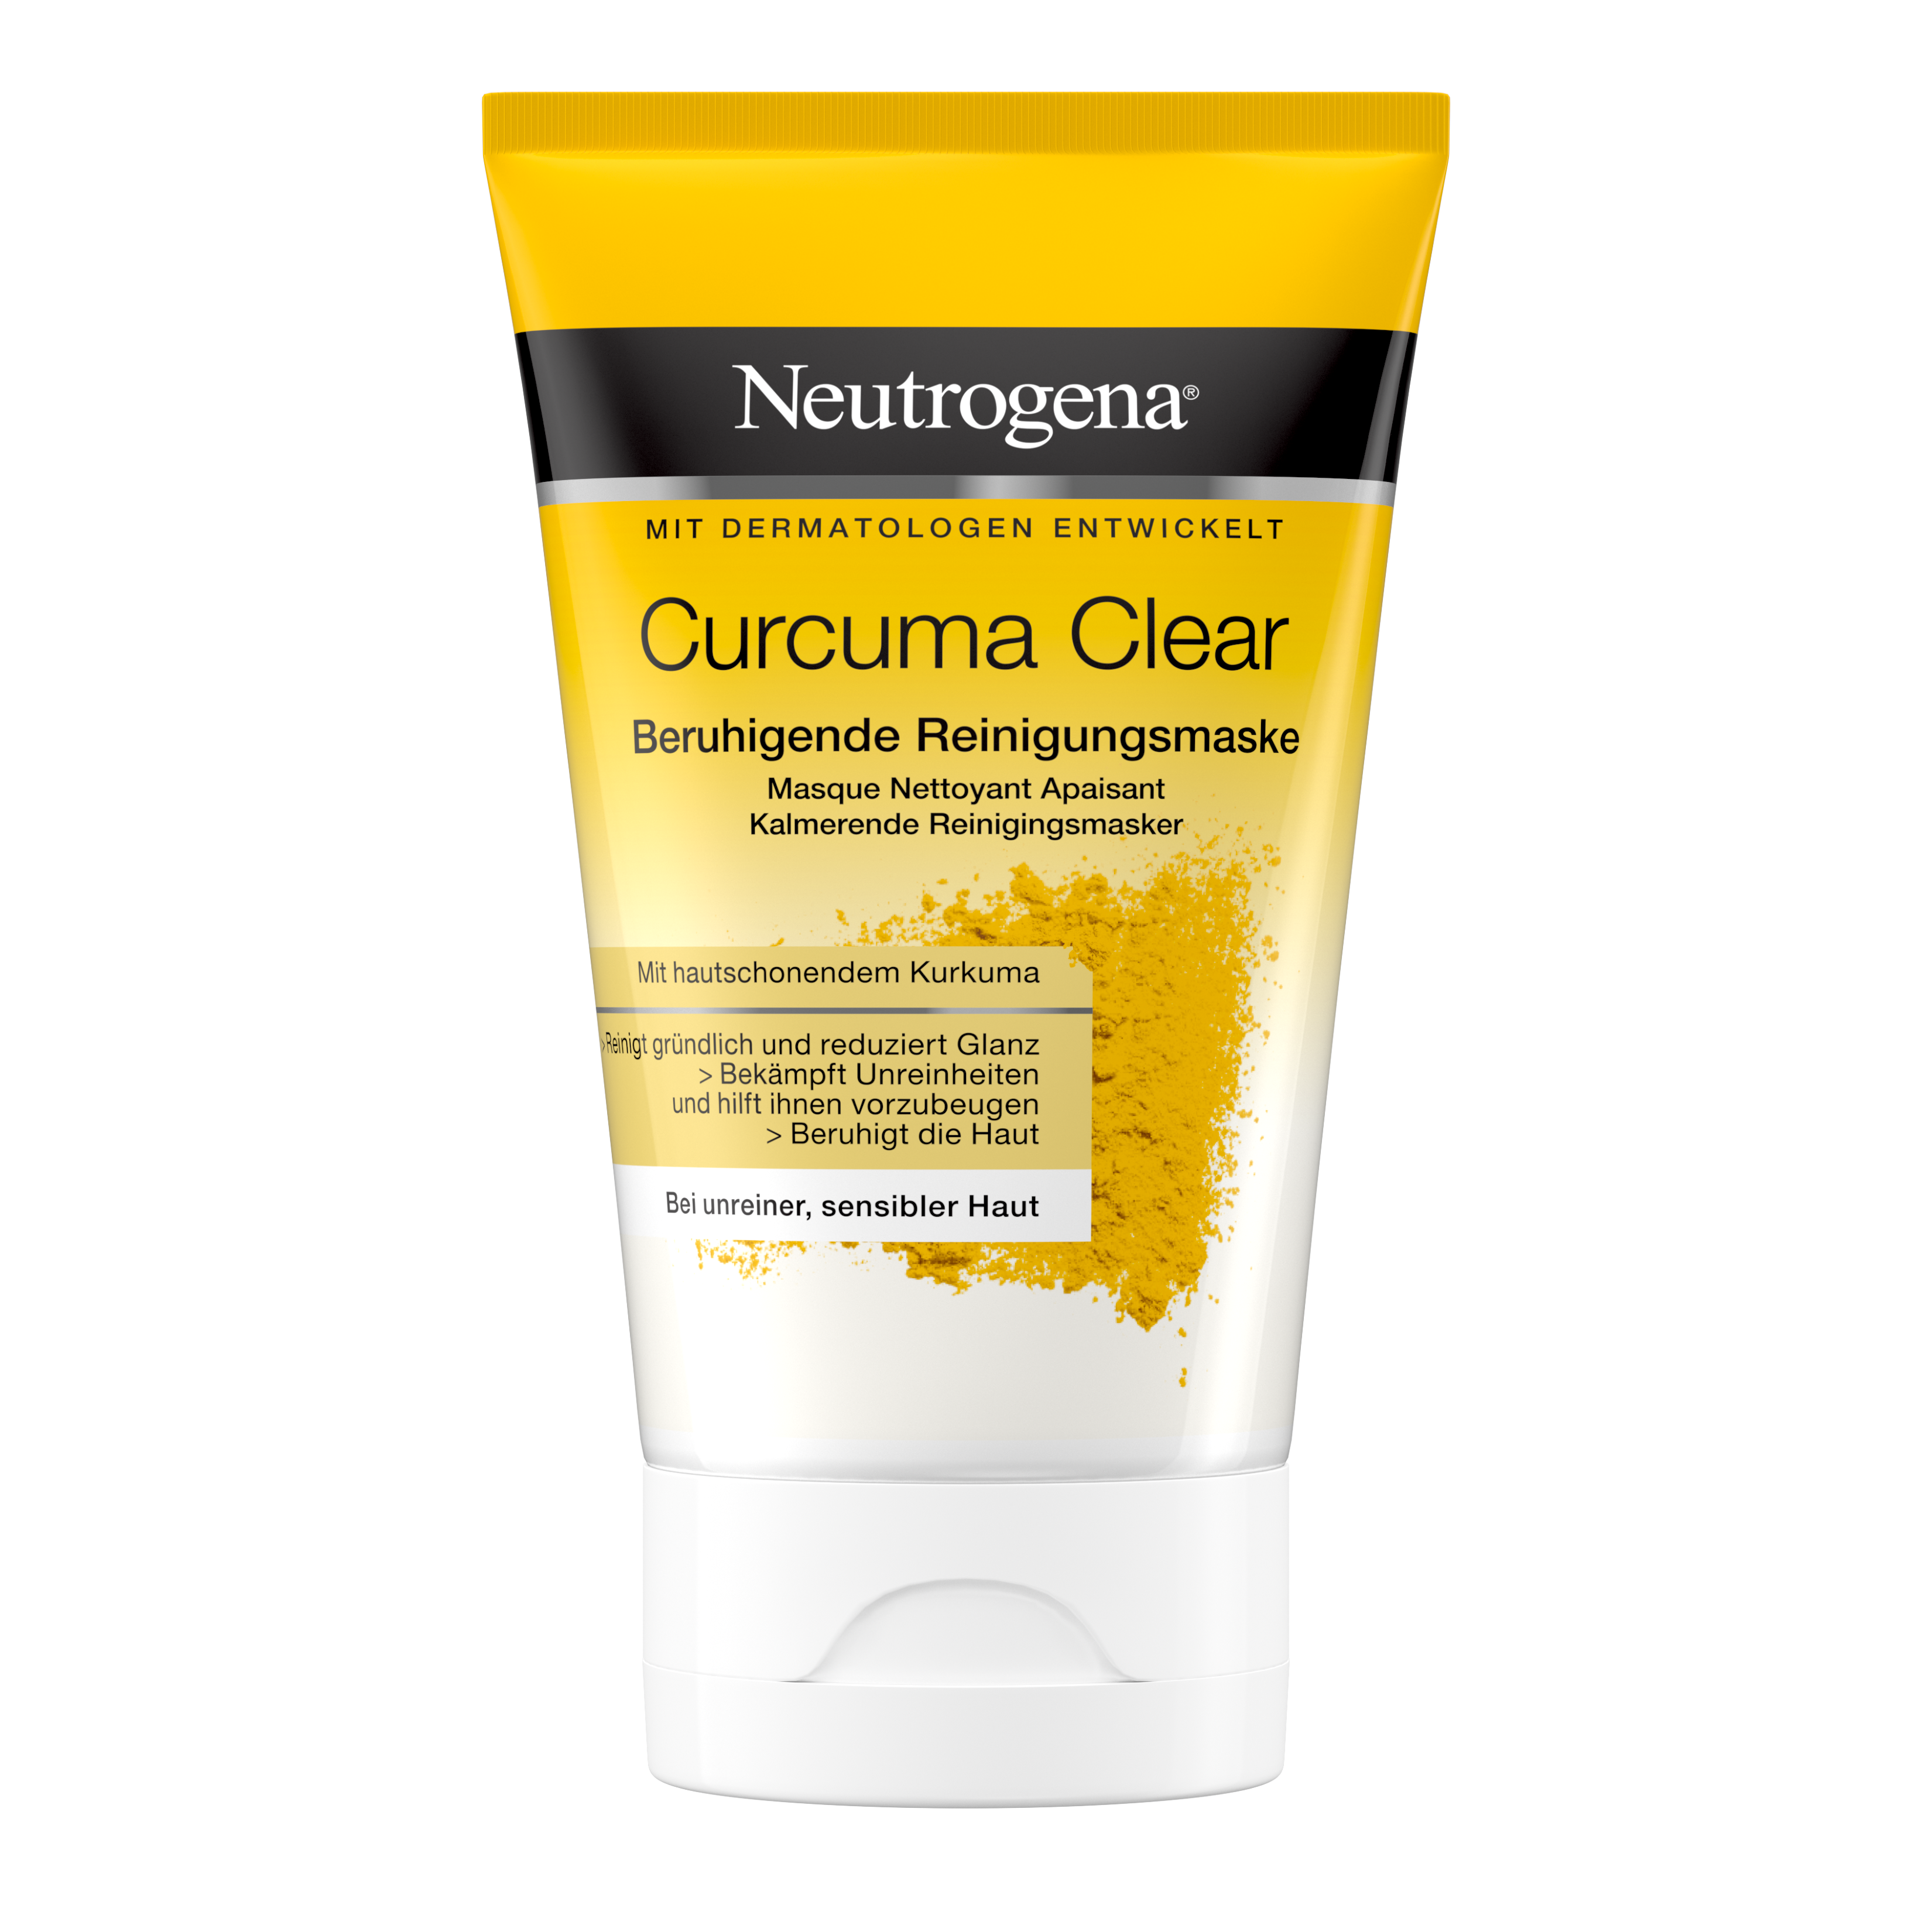 Neutrogena® Curcuma Clear Beruhigende Reinigungsmaske, 50 ml, UVP* 4,99 €